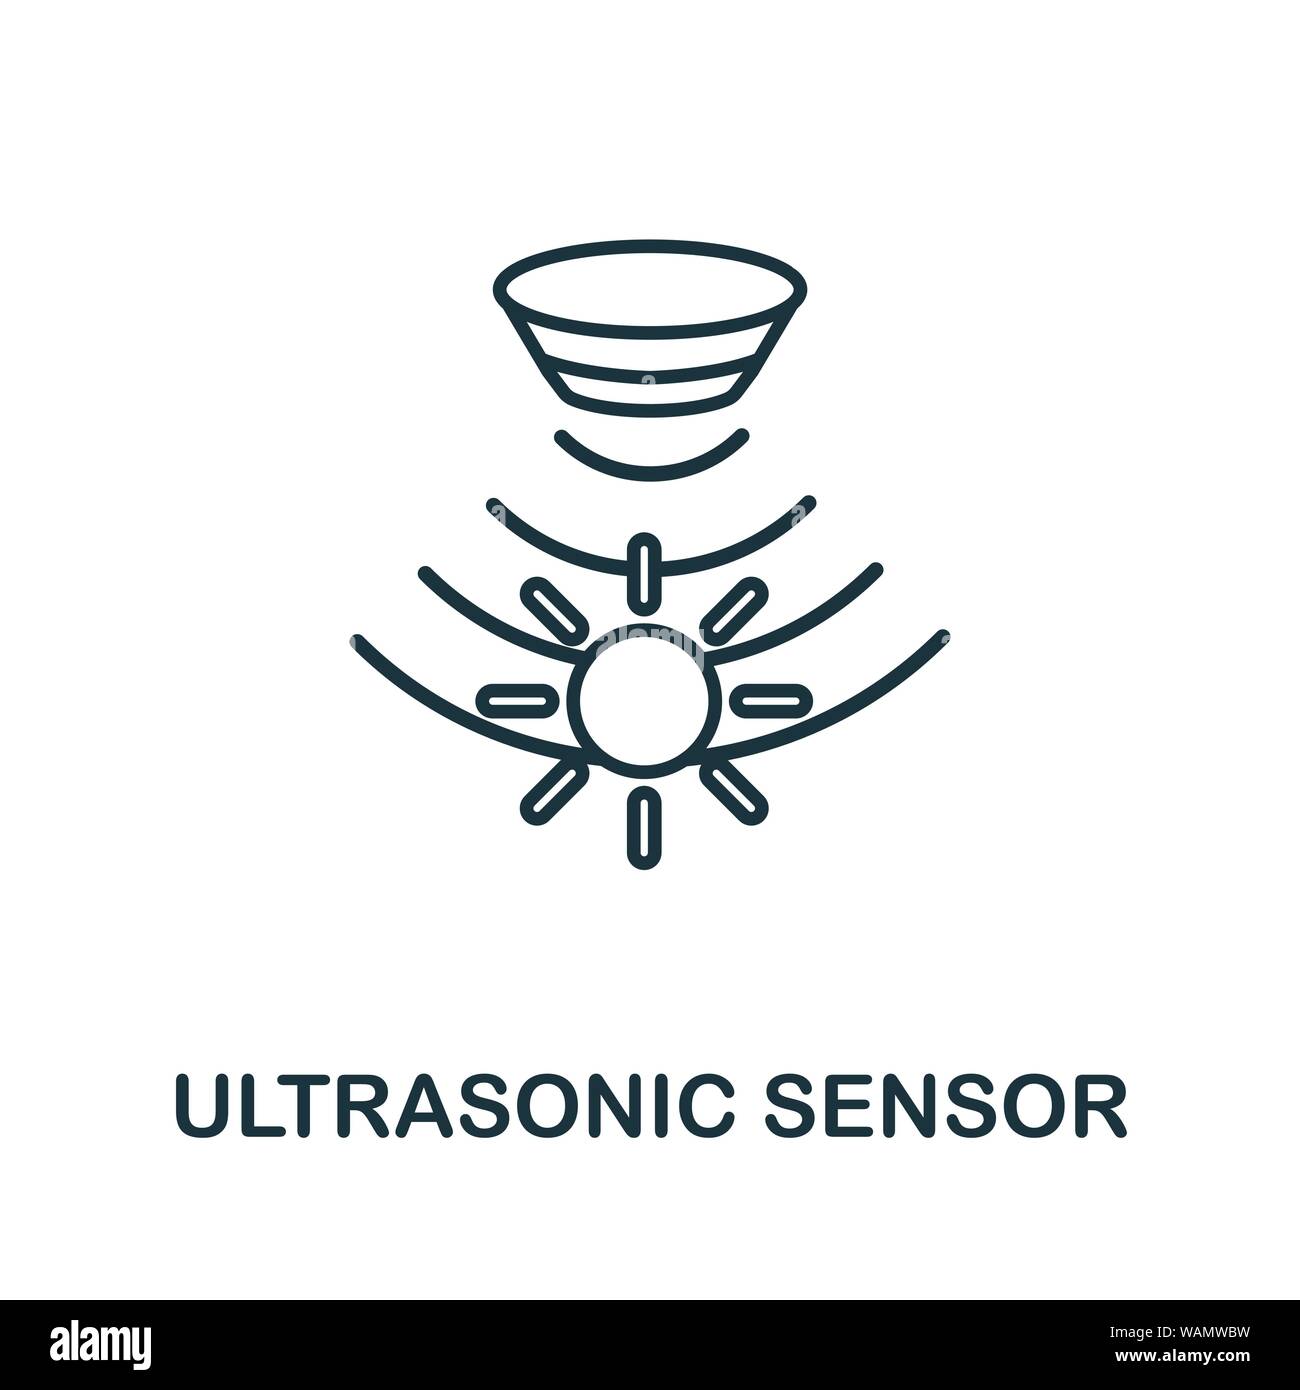 https://c8.alamy.com/compde/wamwbw/symbol-fur-den-ultraschallsensor-dunne-linien-stil-von-sensoren-icons-sammlung-pixel-perfect-einfaches-element-ultraschall-sensor-symbol-fur-web-design-wamwbw.jpg